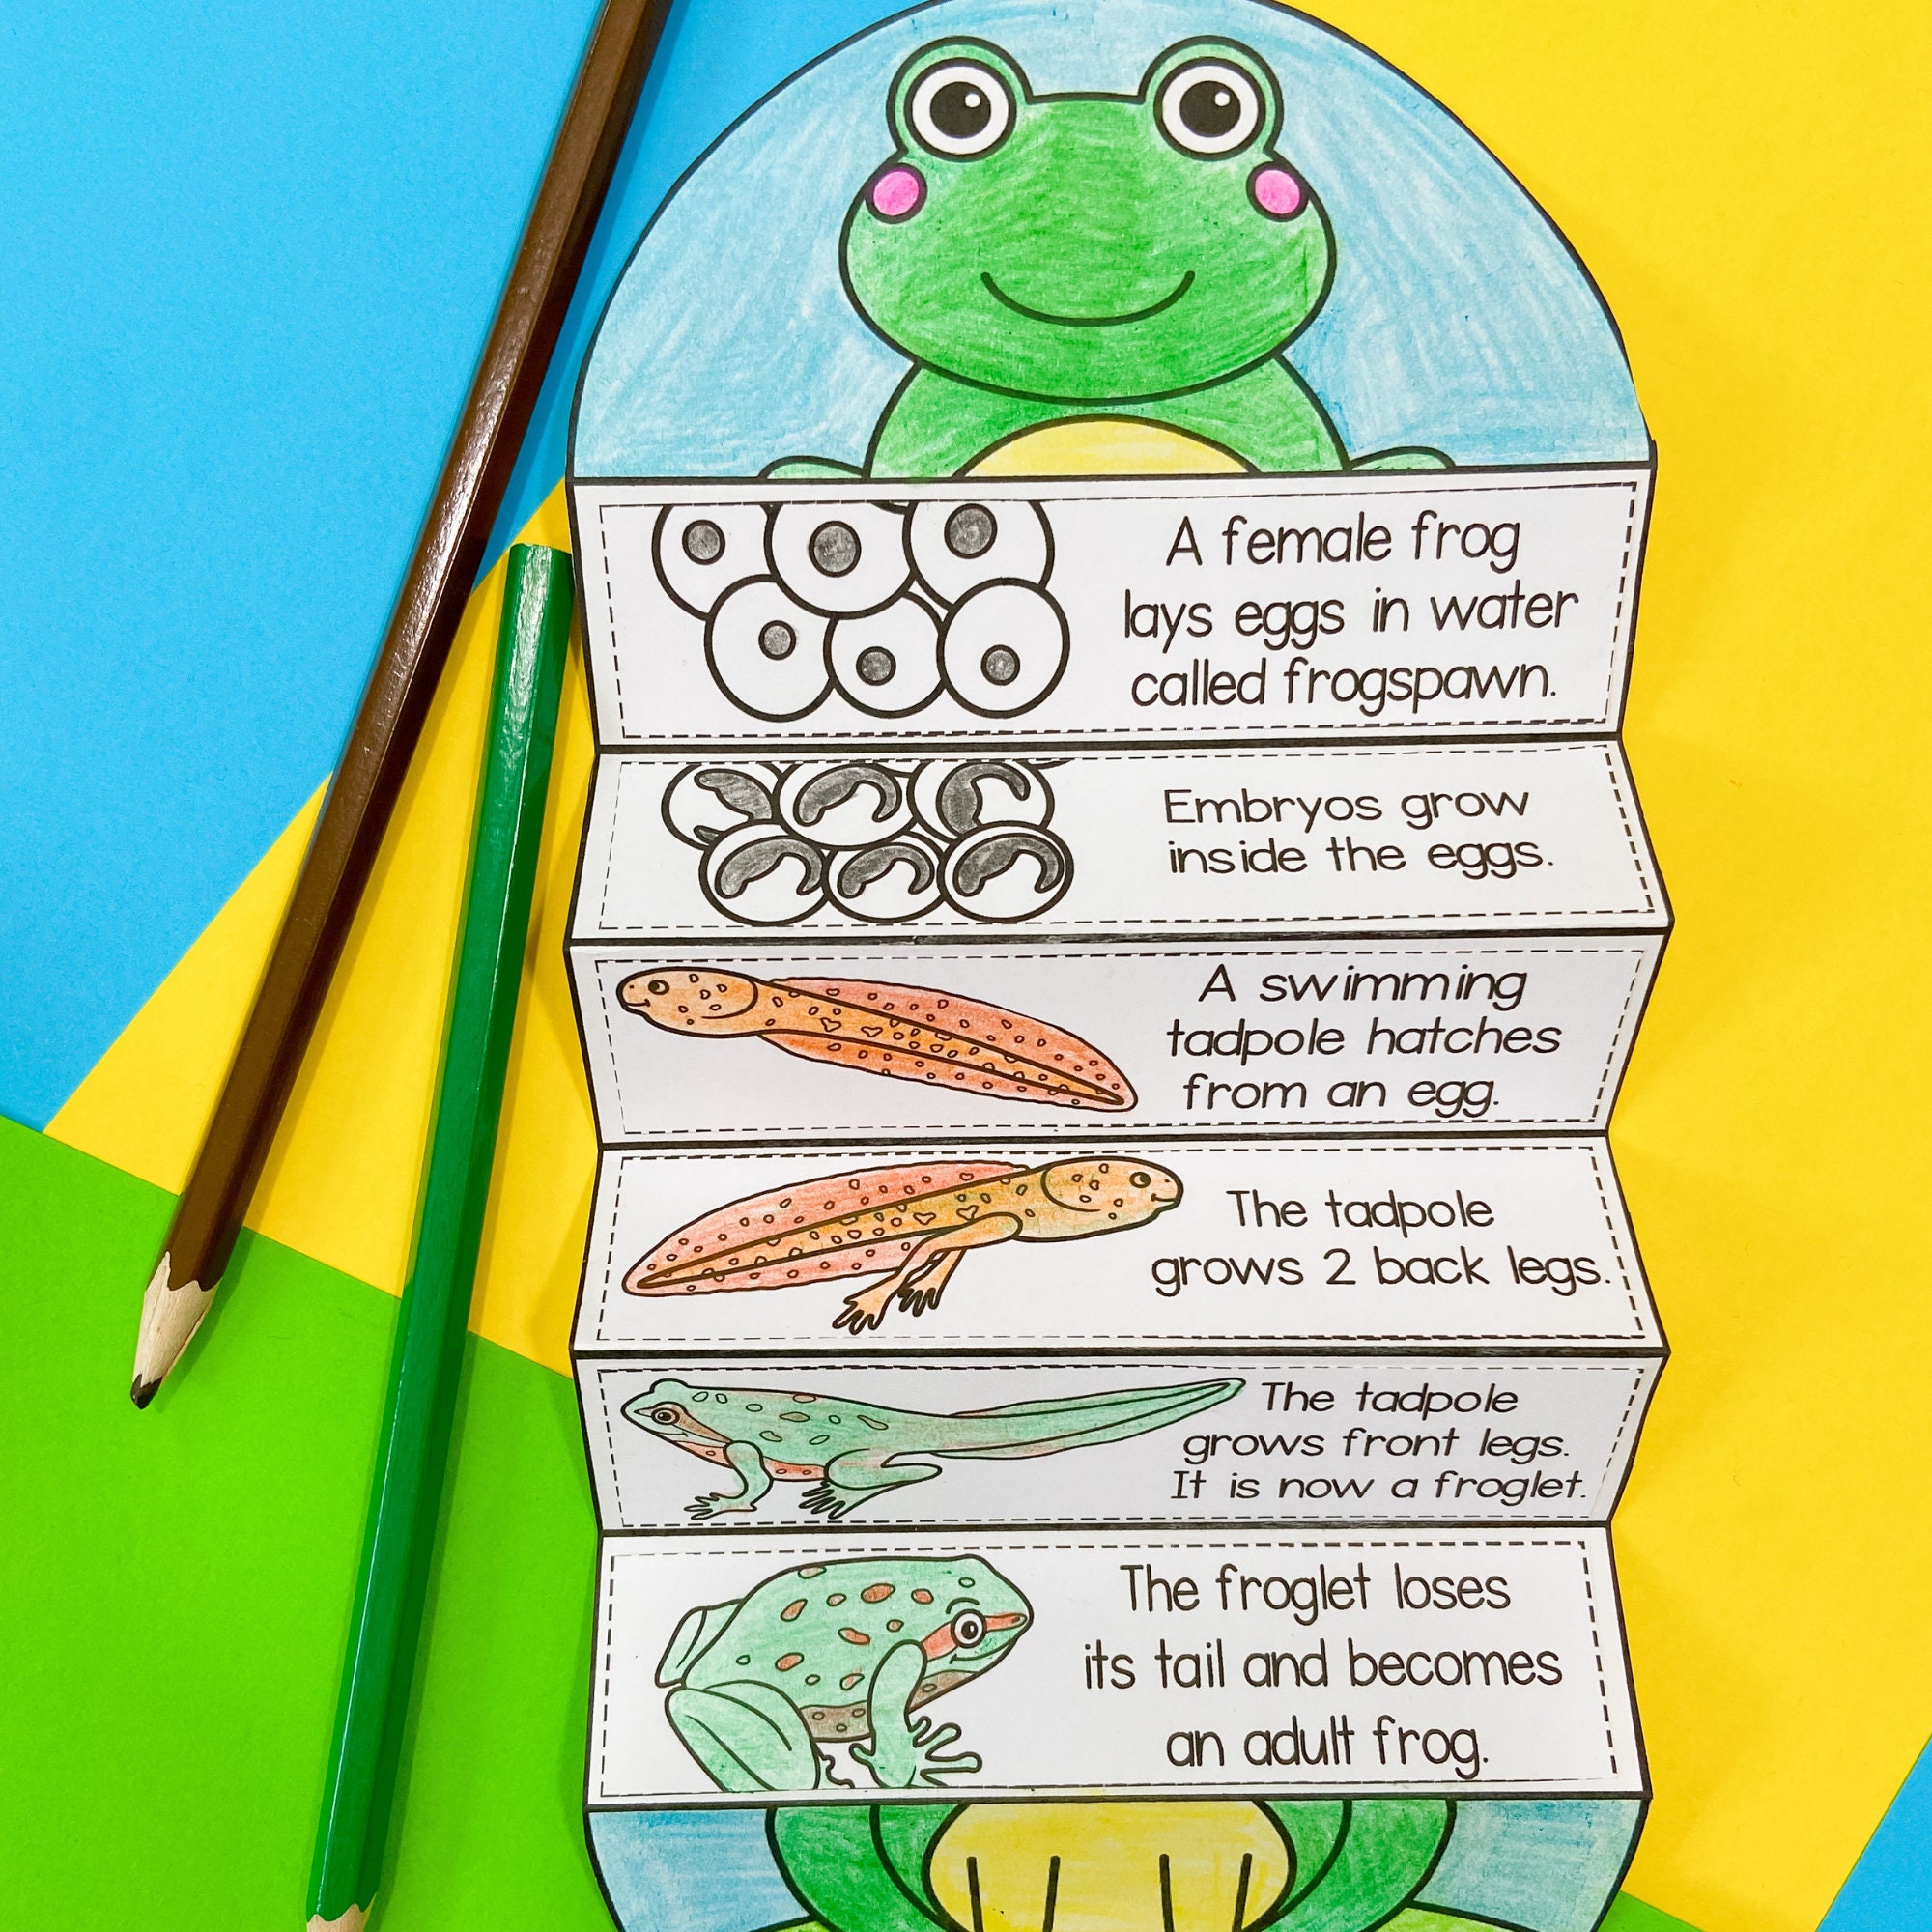 FREE Printable Preschool Frog Life Cycle Flip Book